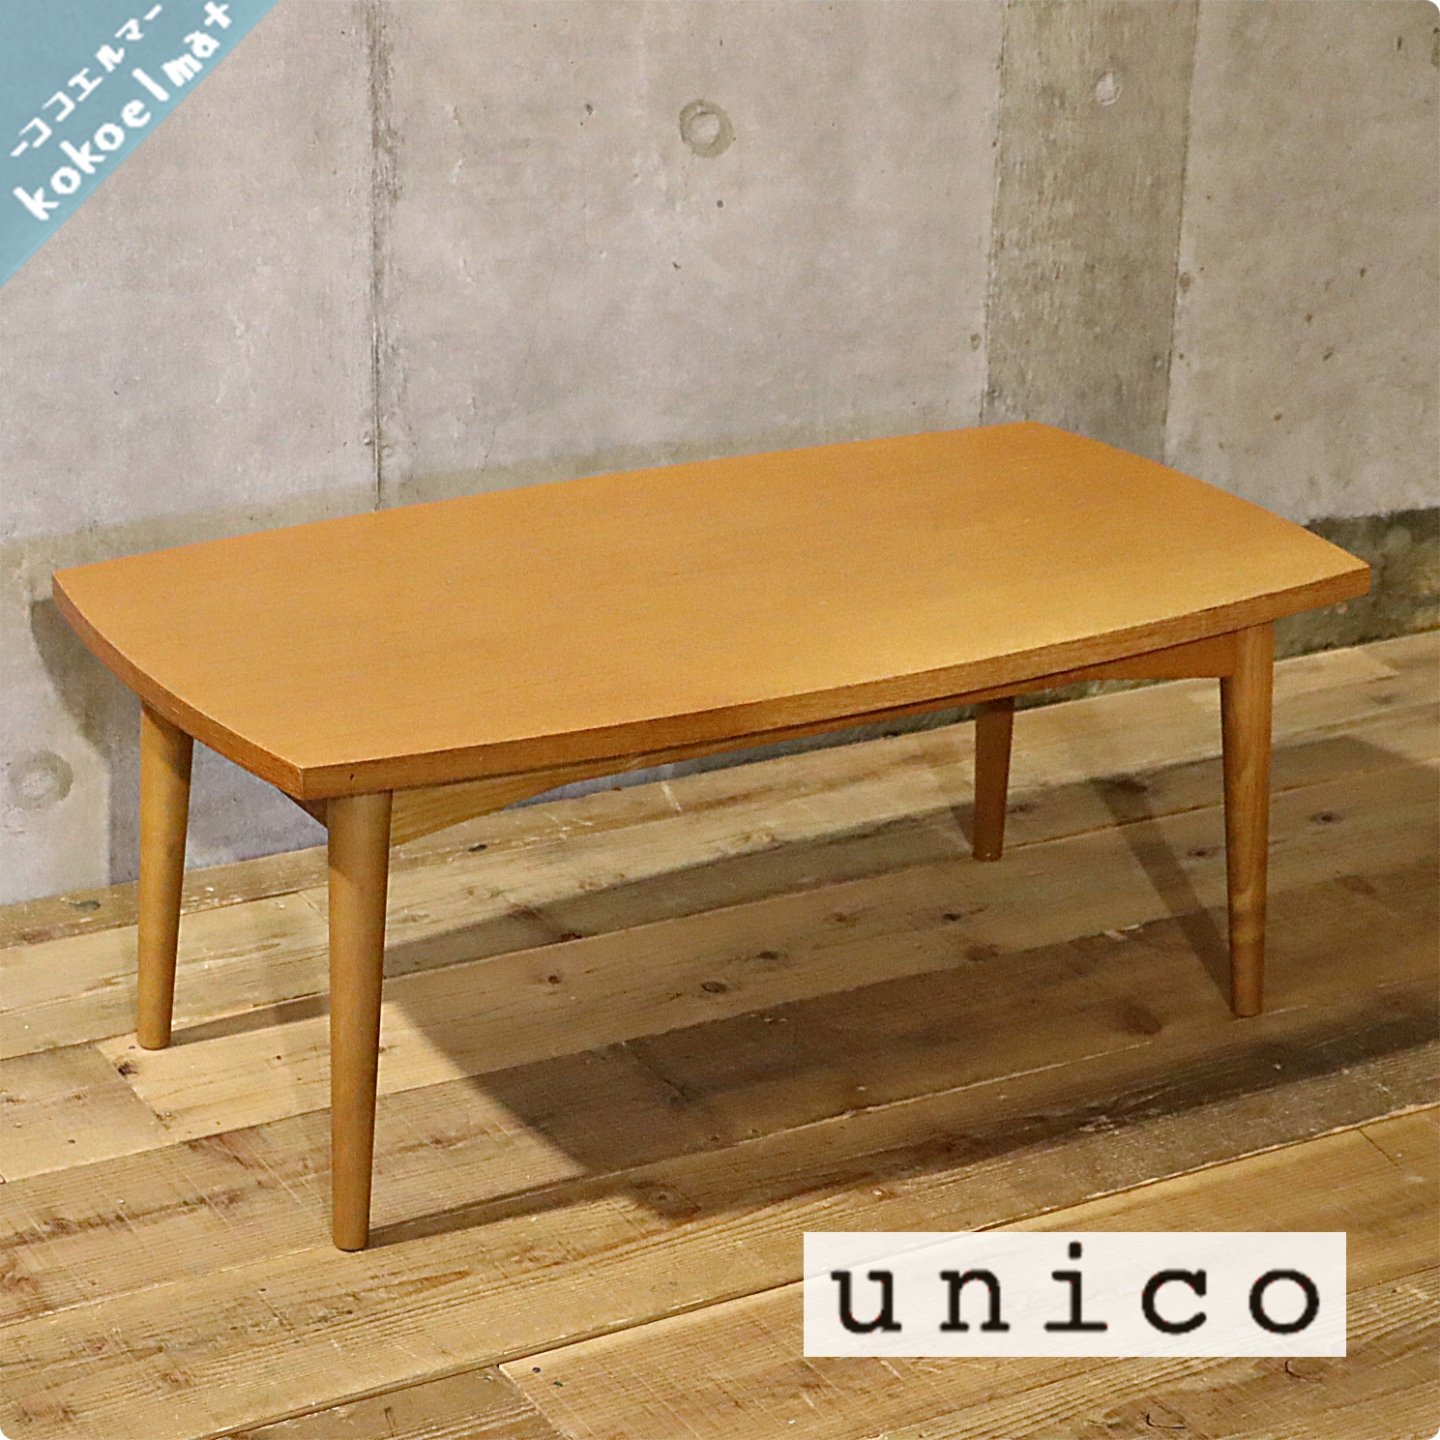 unico(ウニコ)のHOLM(ホルム)シリーズ ローテーブルです！しっとりと落ち着いたチークを使用した北欧スタイルのレトロなデザインのリビングテーブル。ヴィンテージテイストにもおススメです♪  - kokoelma -ココエルマ- 雑貨・中古家具・北欧家具・アンティーク家具の通販 ...